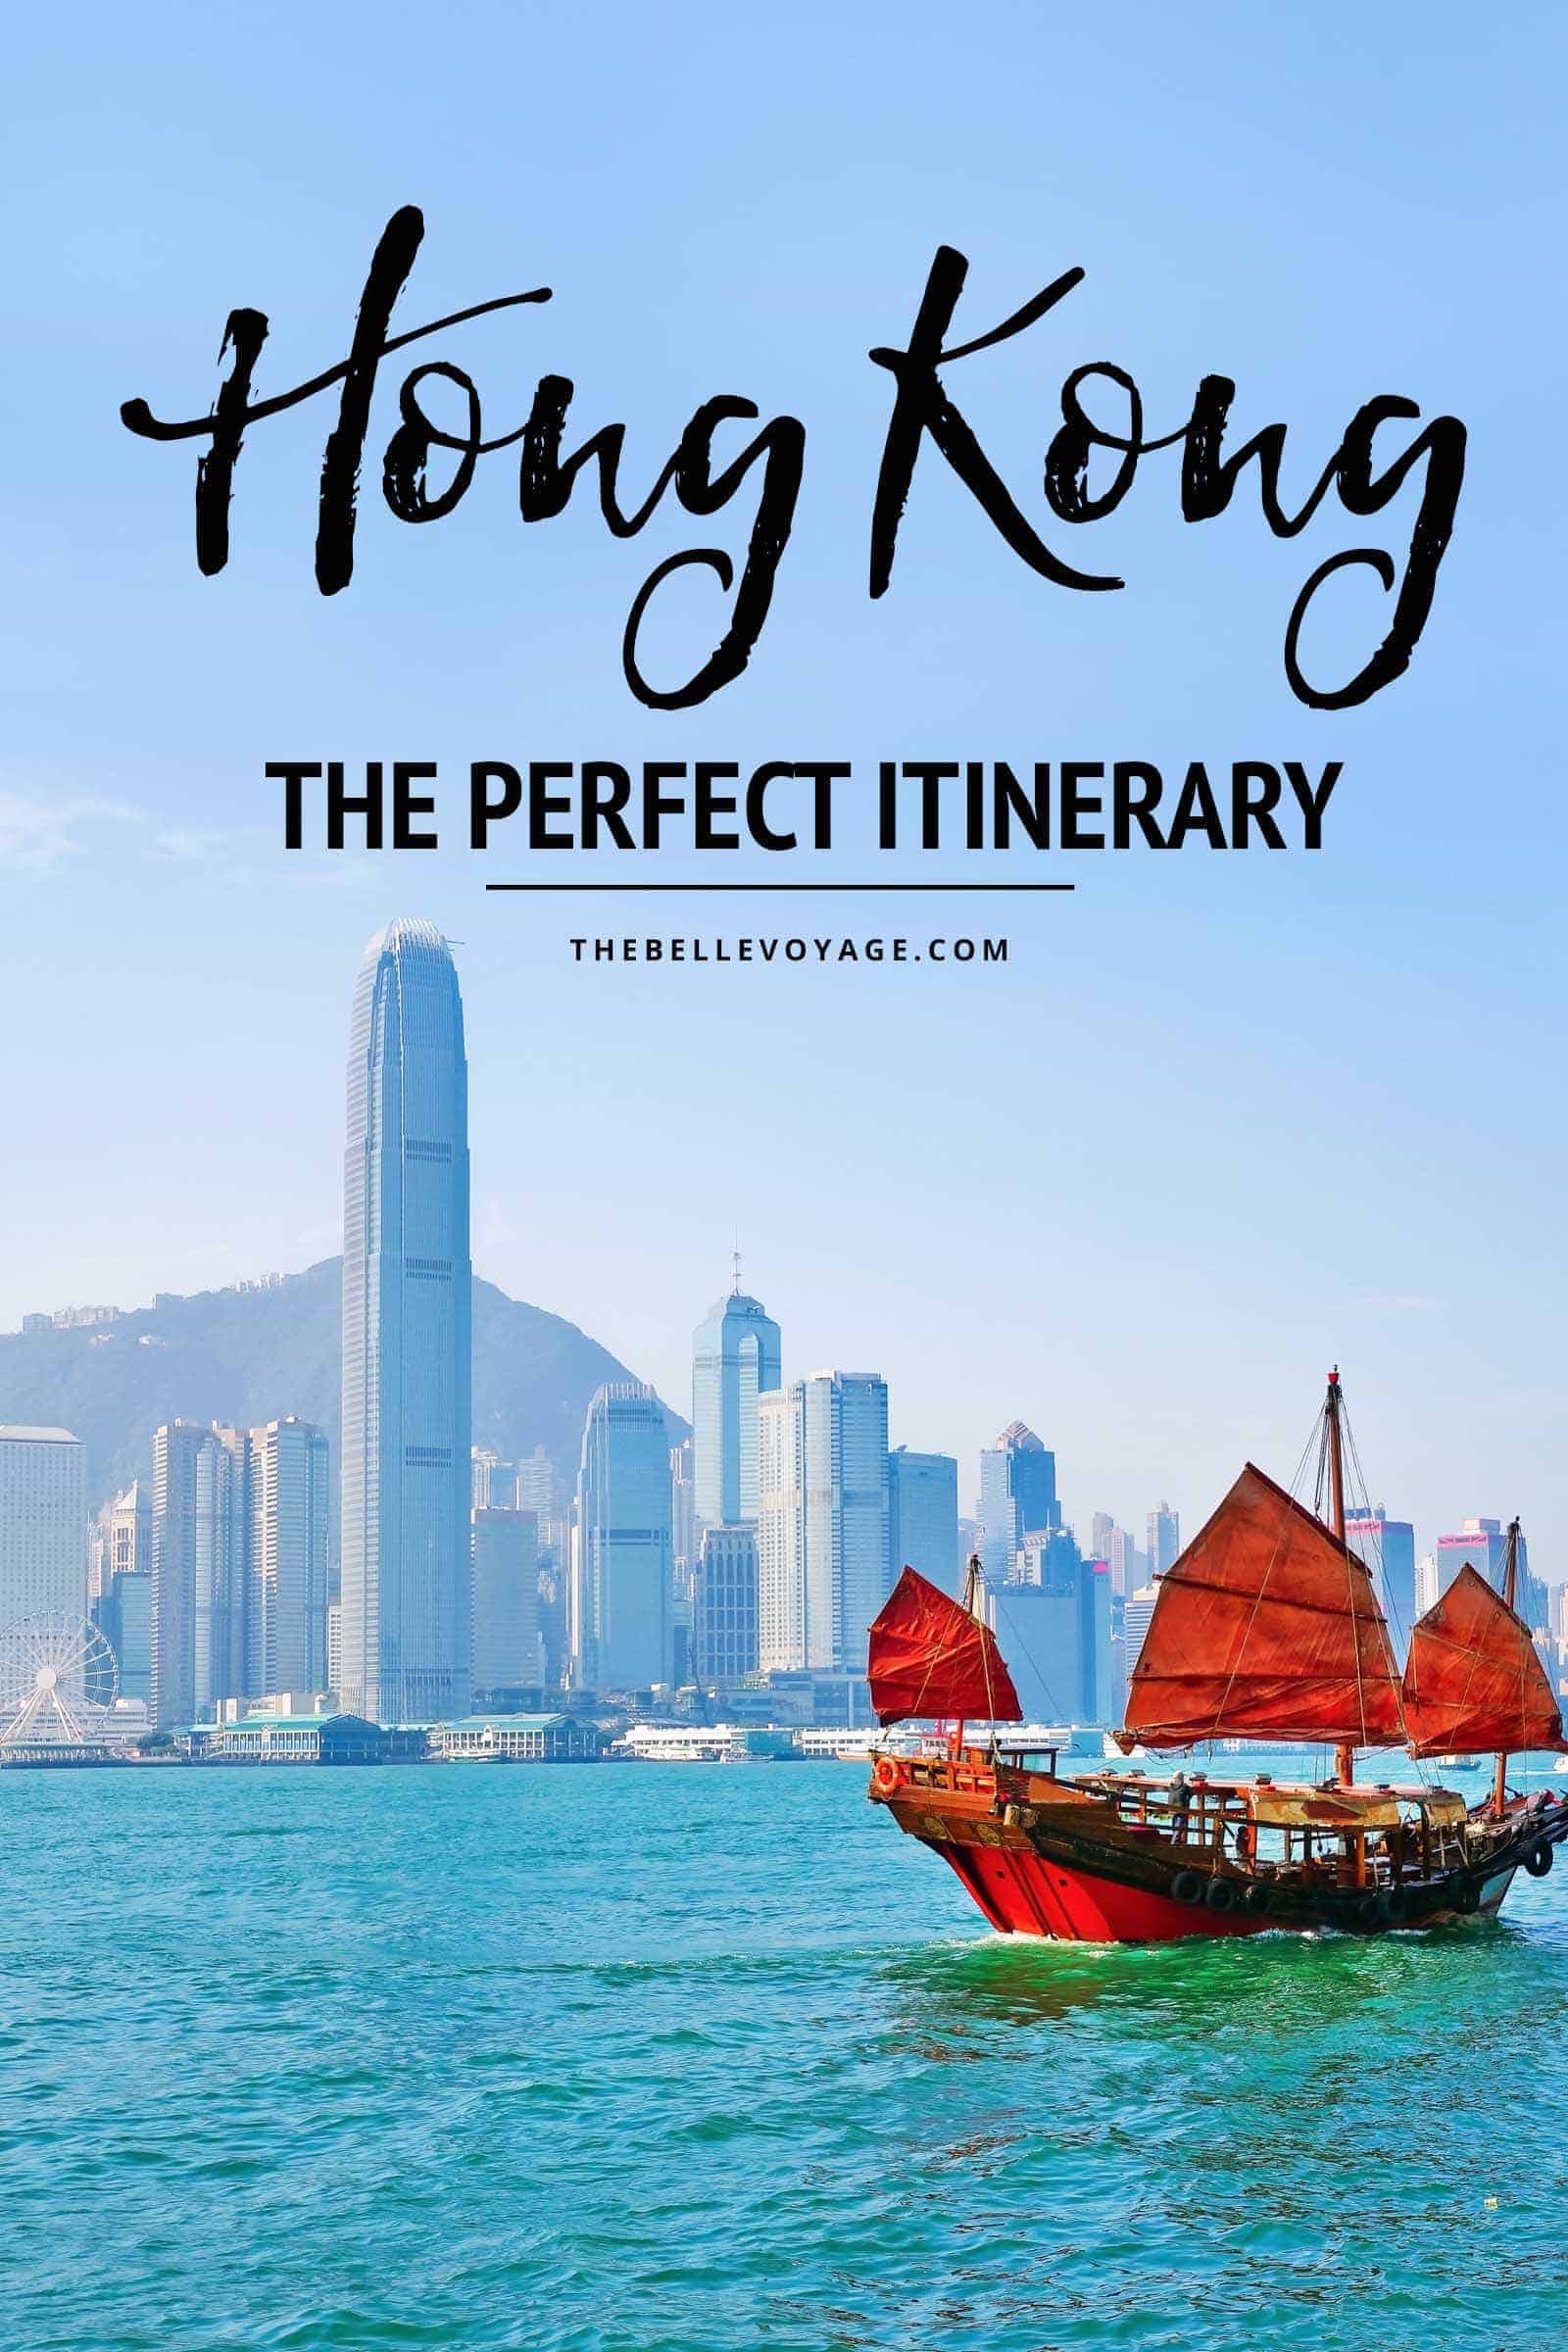 hong kong travel advice uk